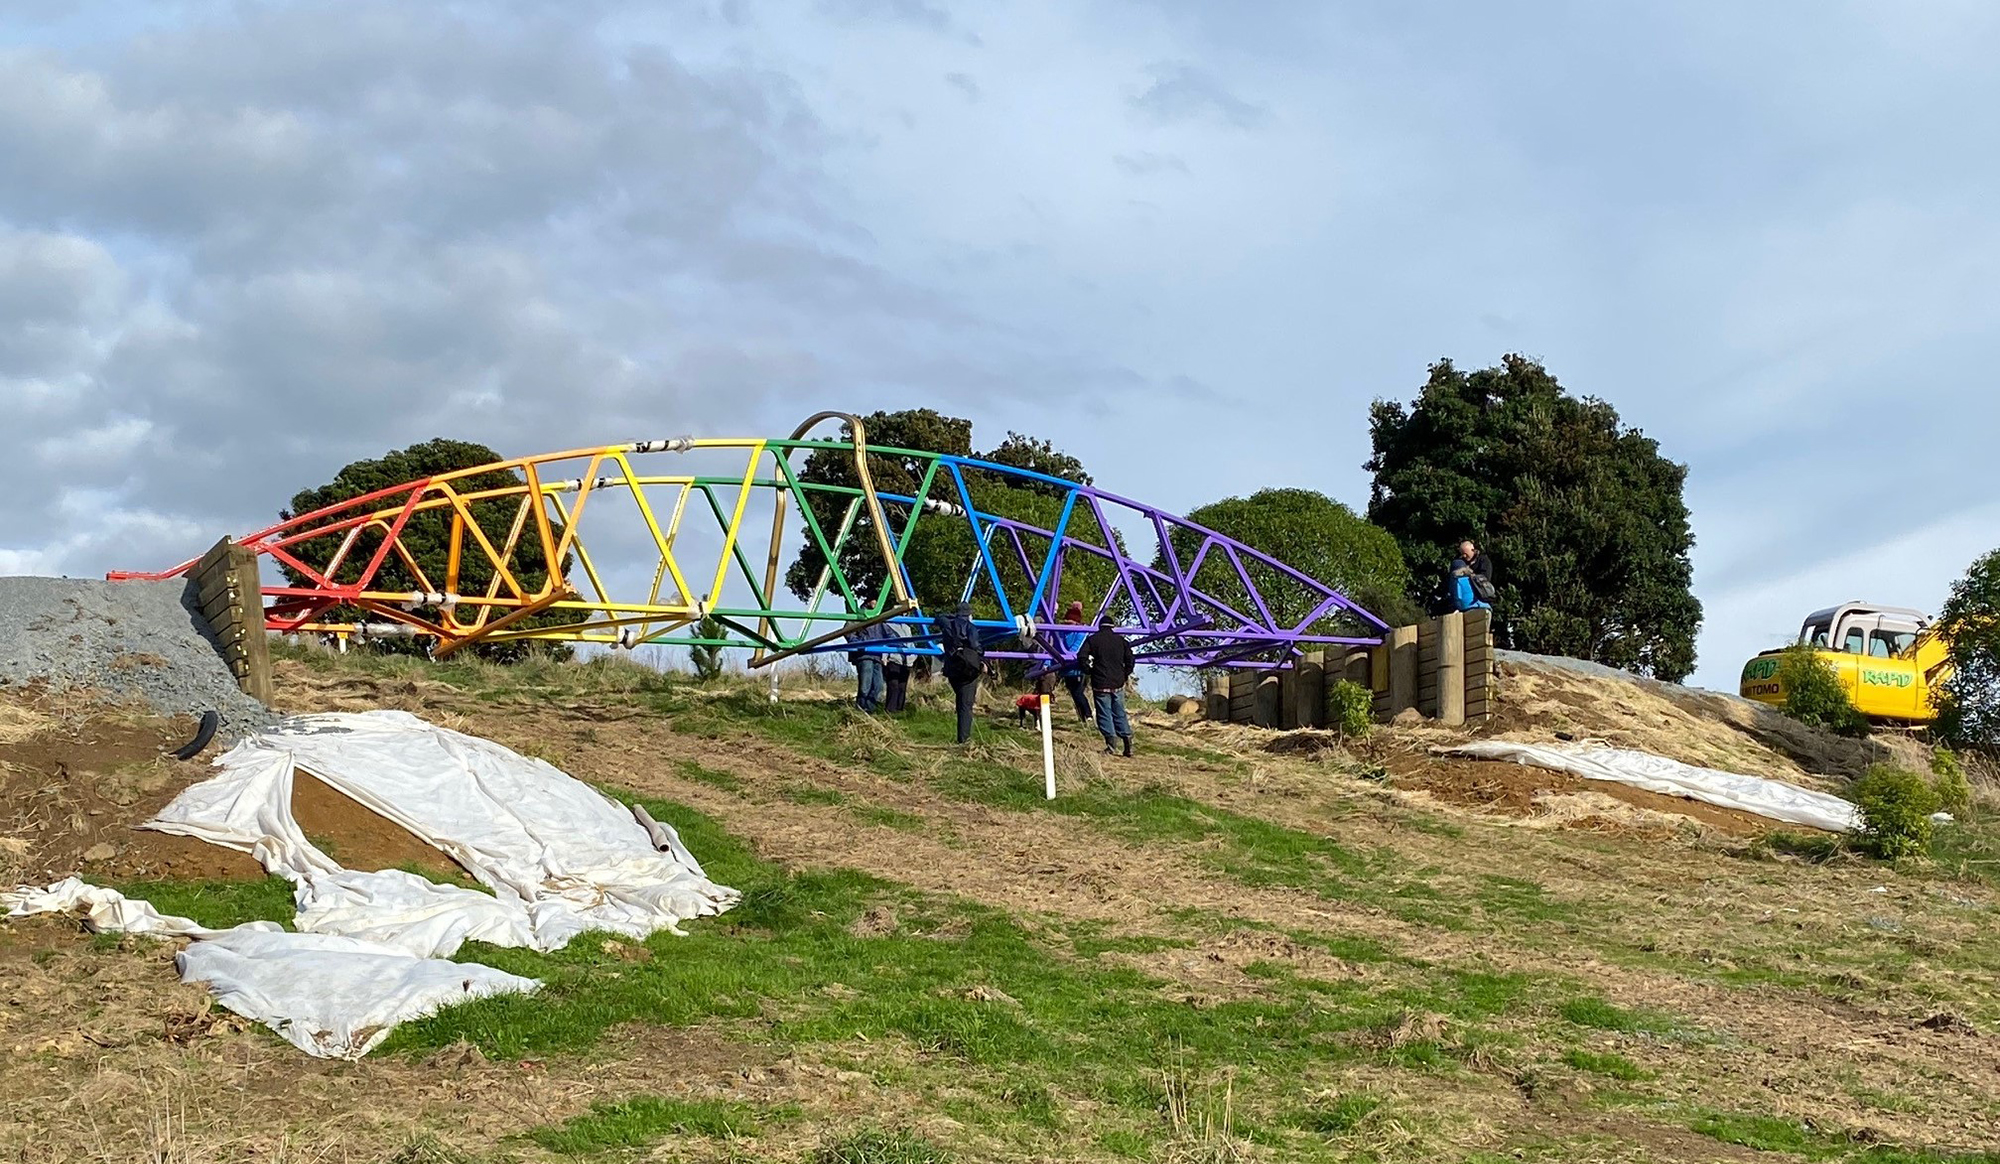 Rainbow bridge being placed in position on hillside.